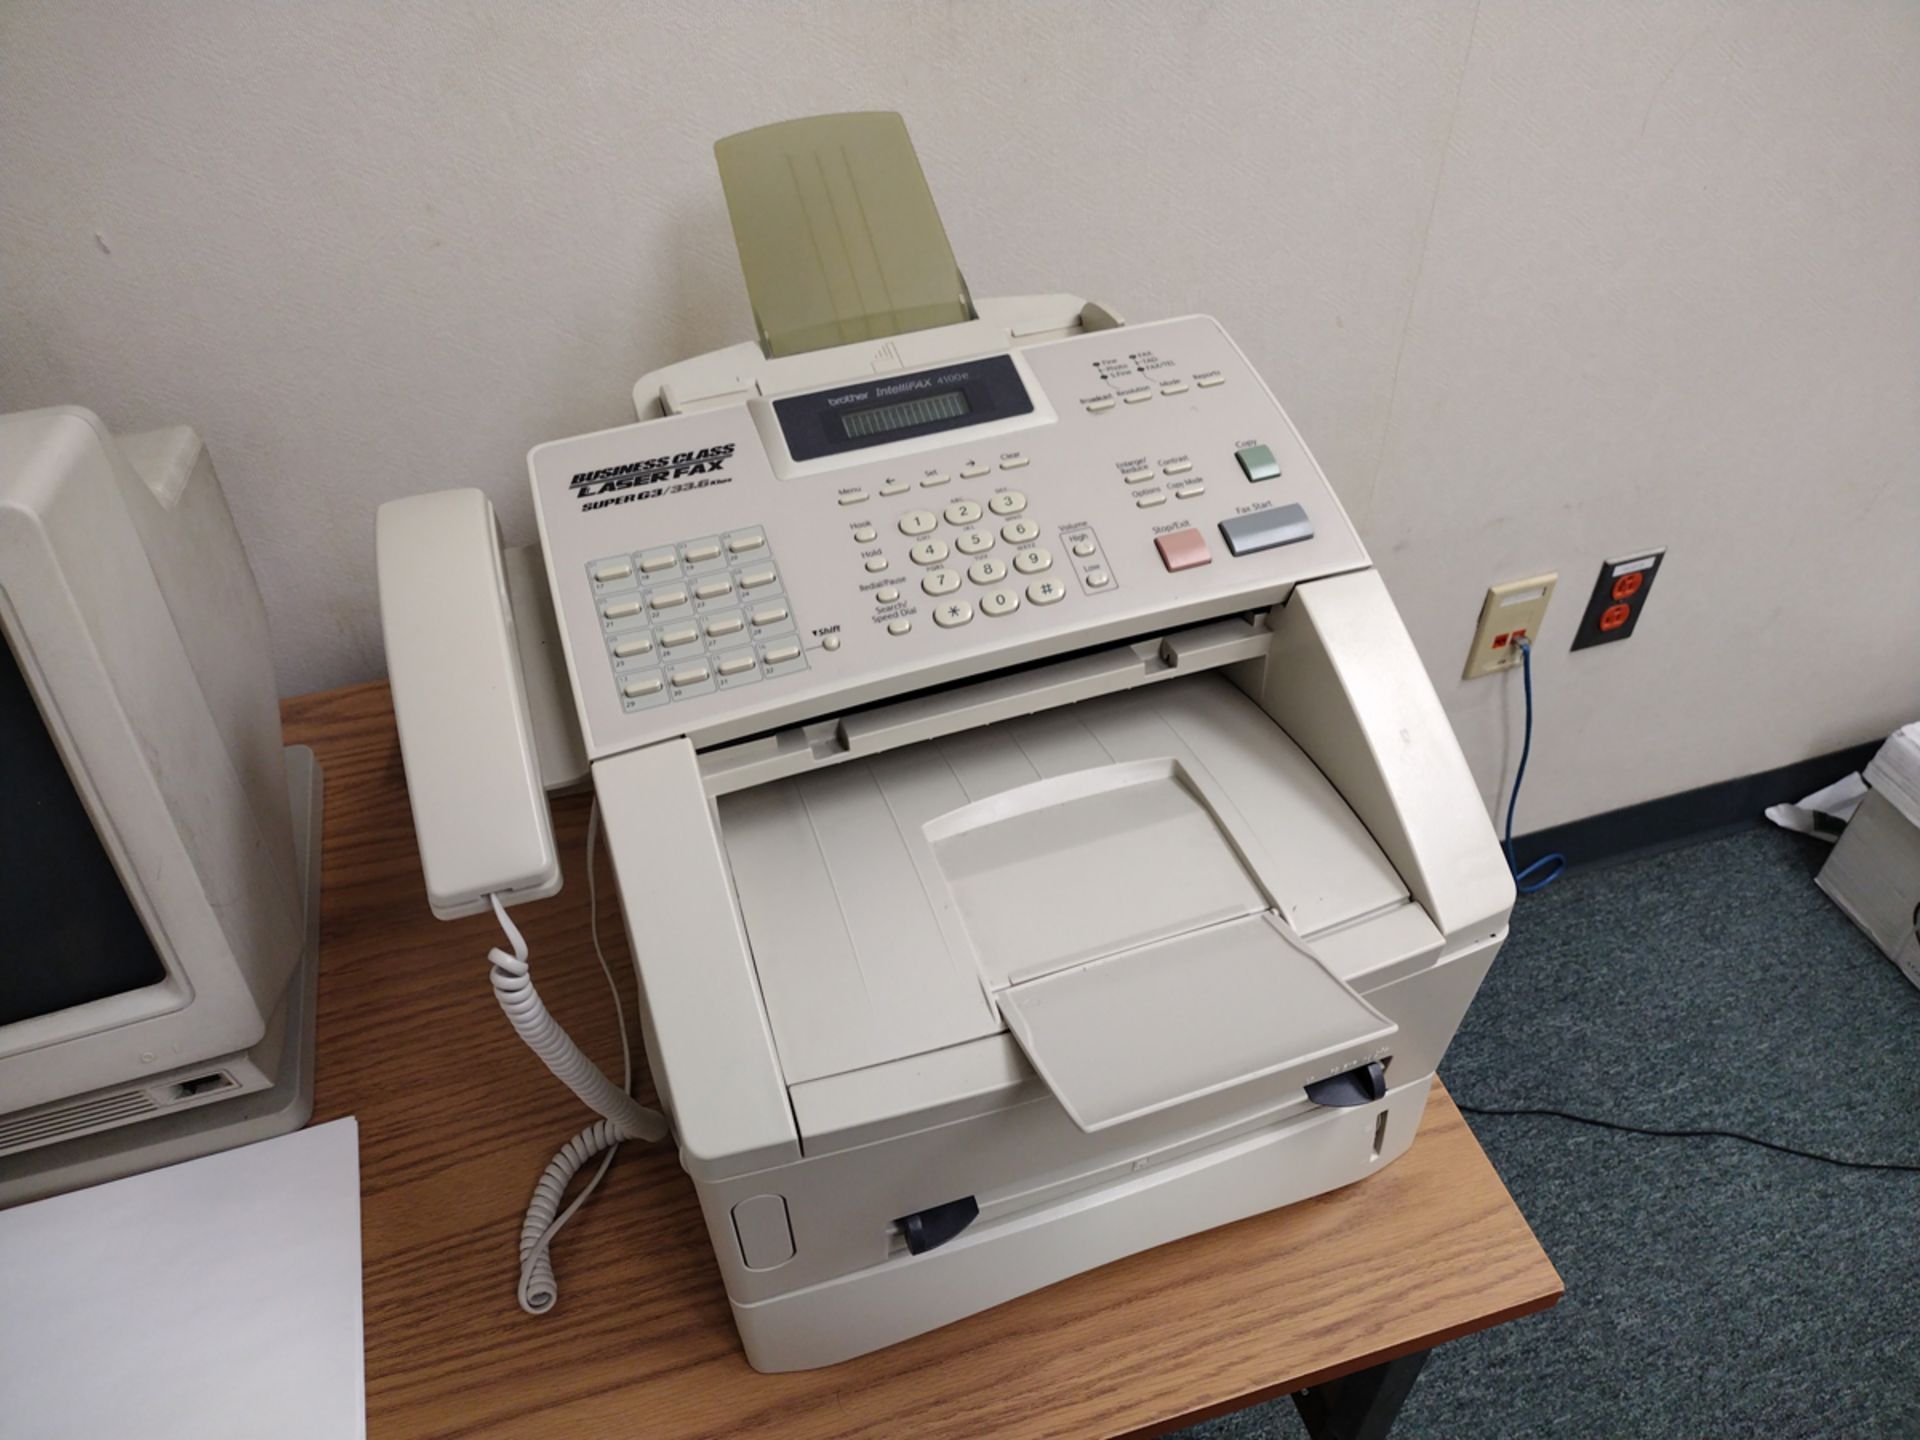 Brother Intellifax 4100e Fax Machine